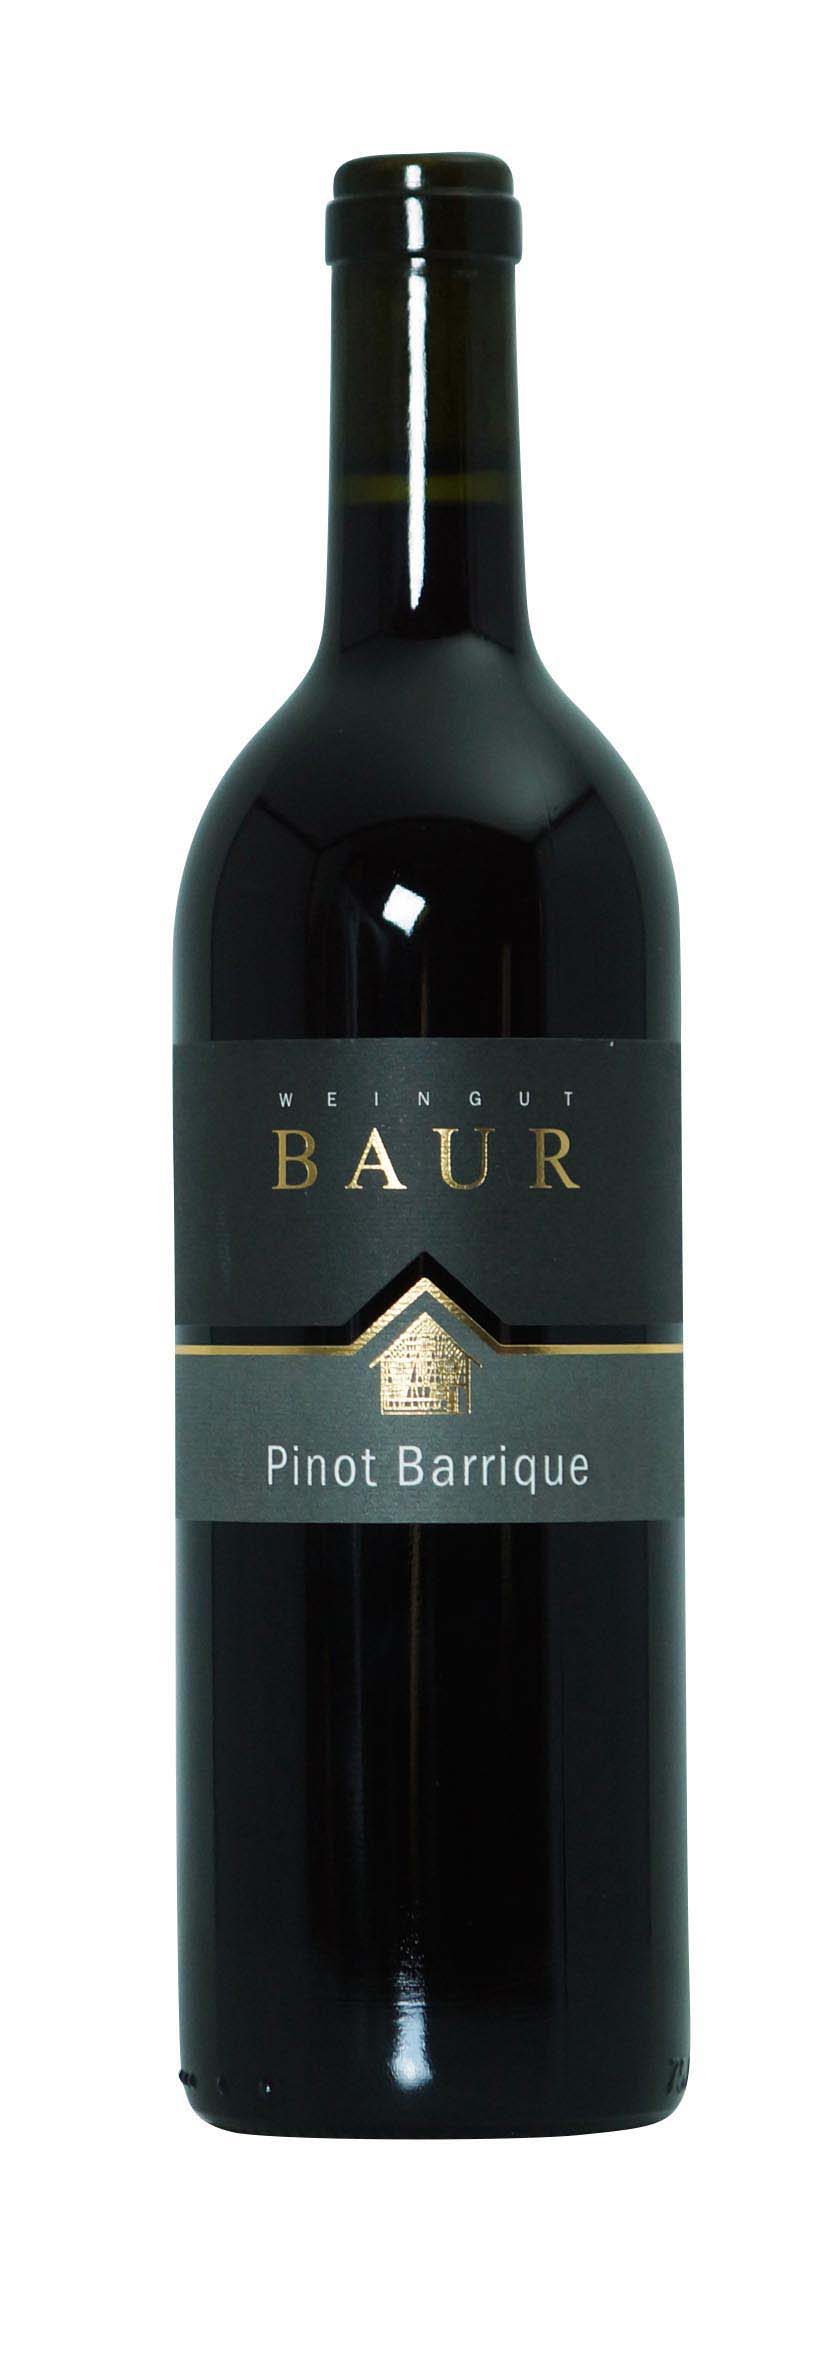 Baur Pinot Barrique 2011